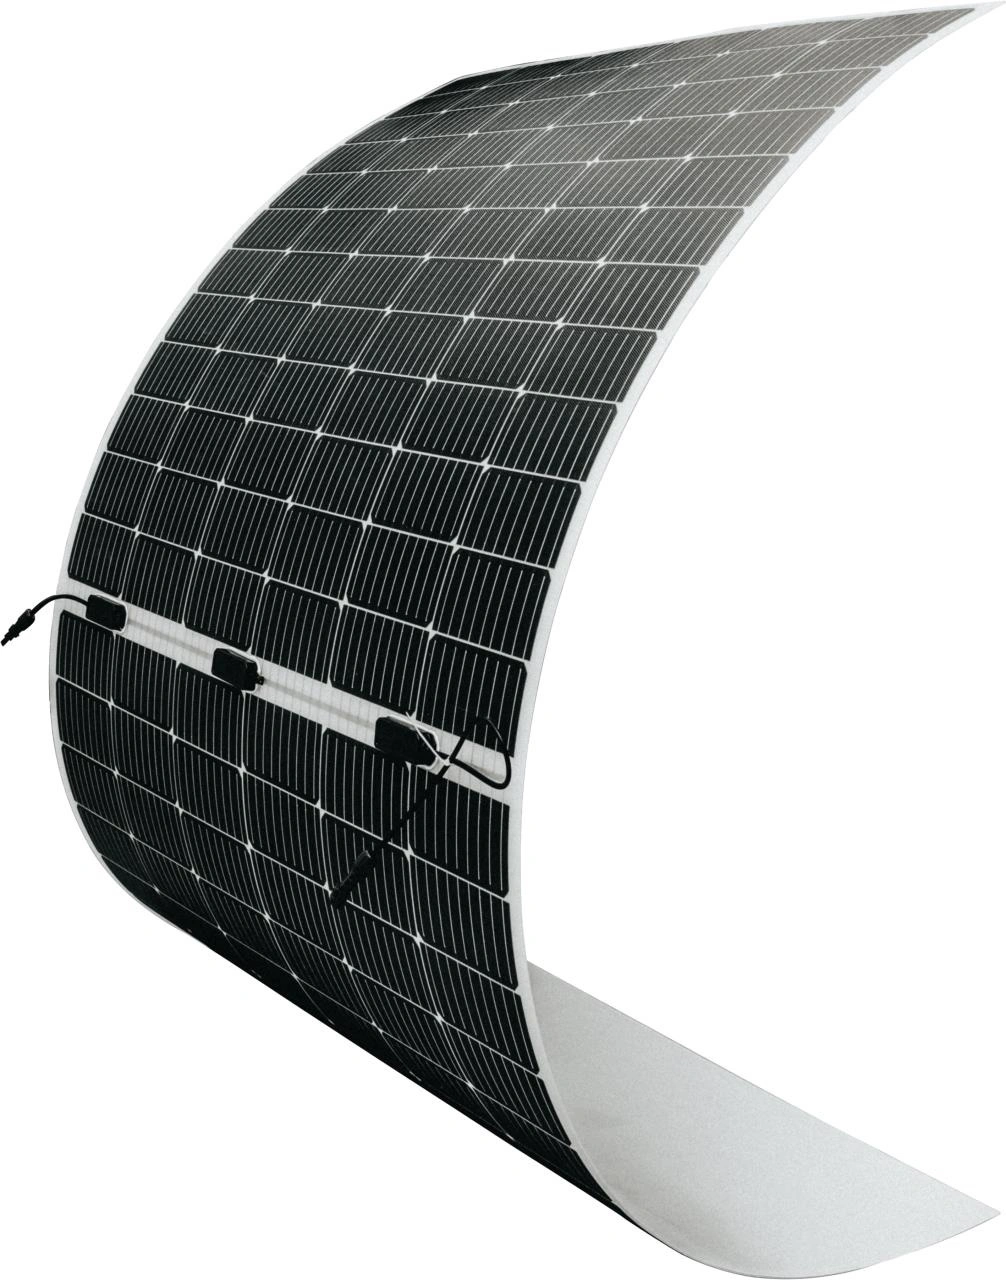 520W 430W 375W 175W 100W 90W Flexible Solar Panel Bendable Solar Panel Curved Solar Panel Foldable Solar Panel Portable Solar Panel for Home Roof Carport RV